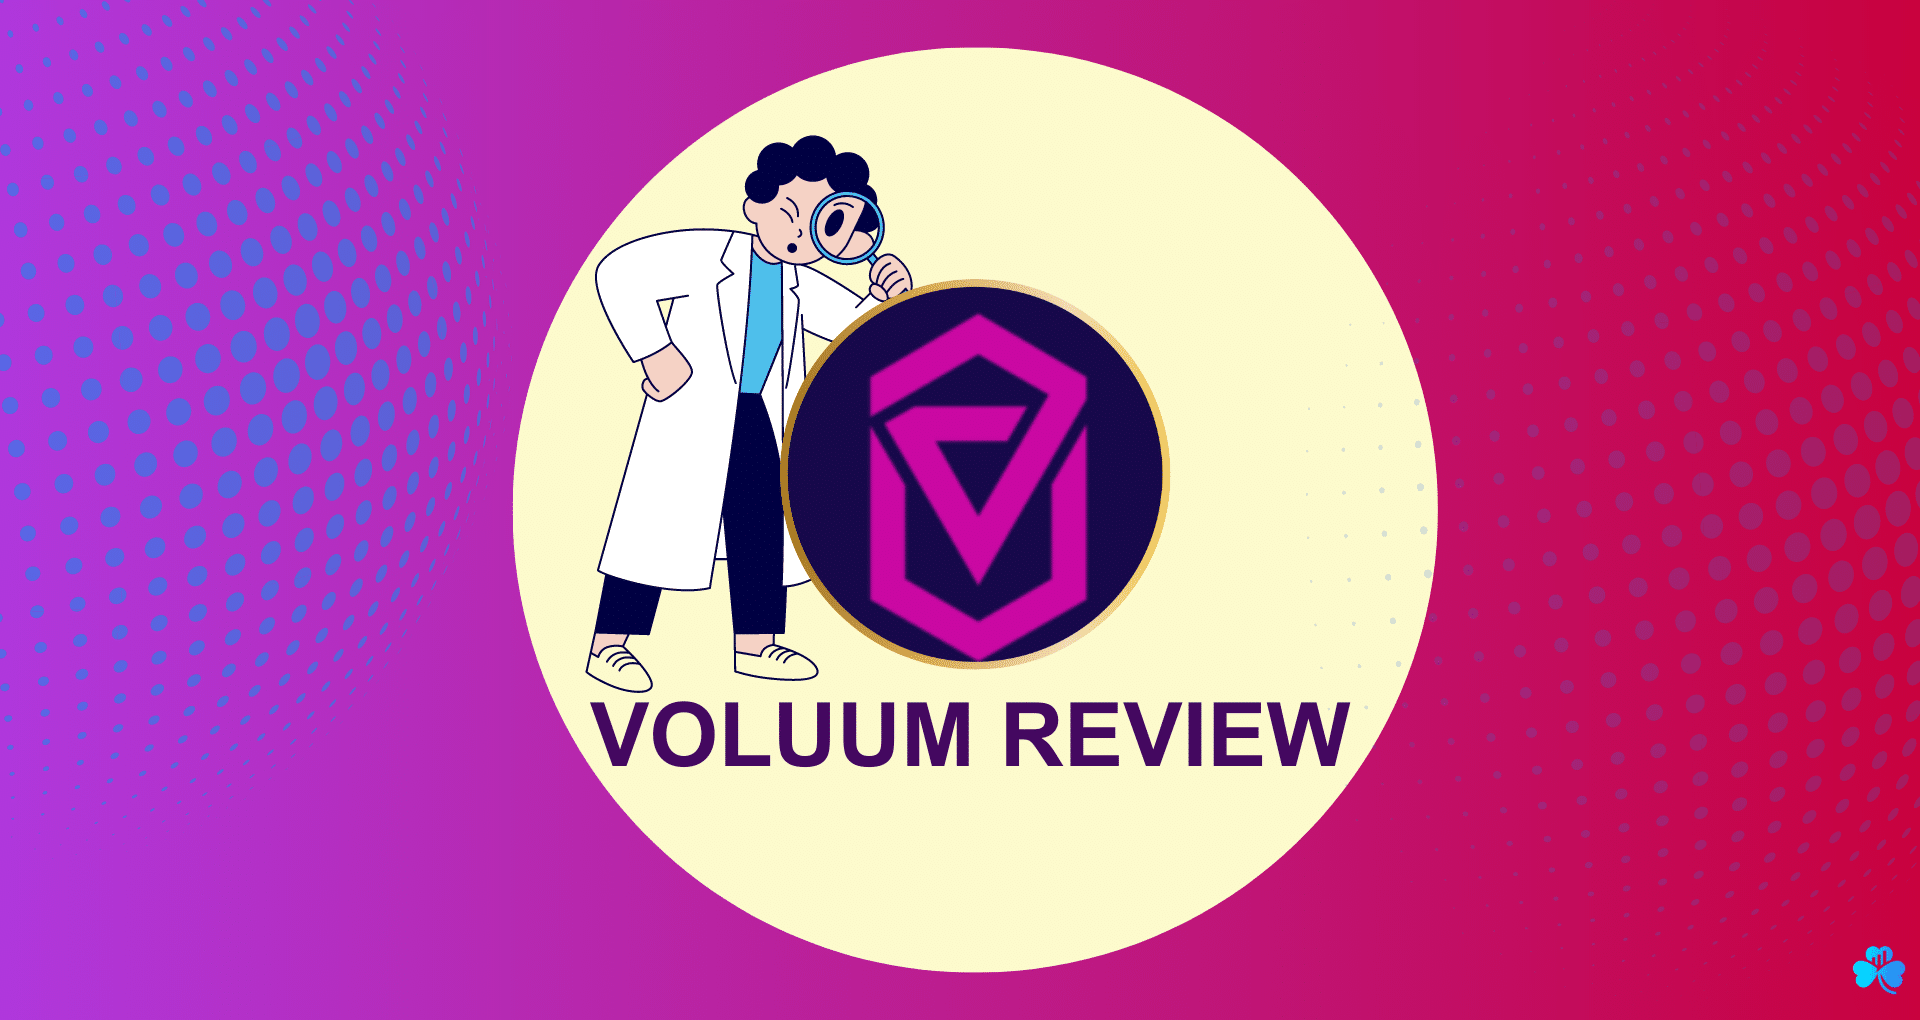 Volume Reviews